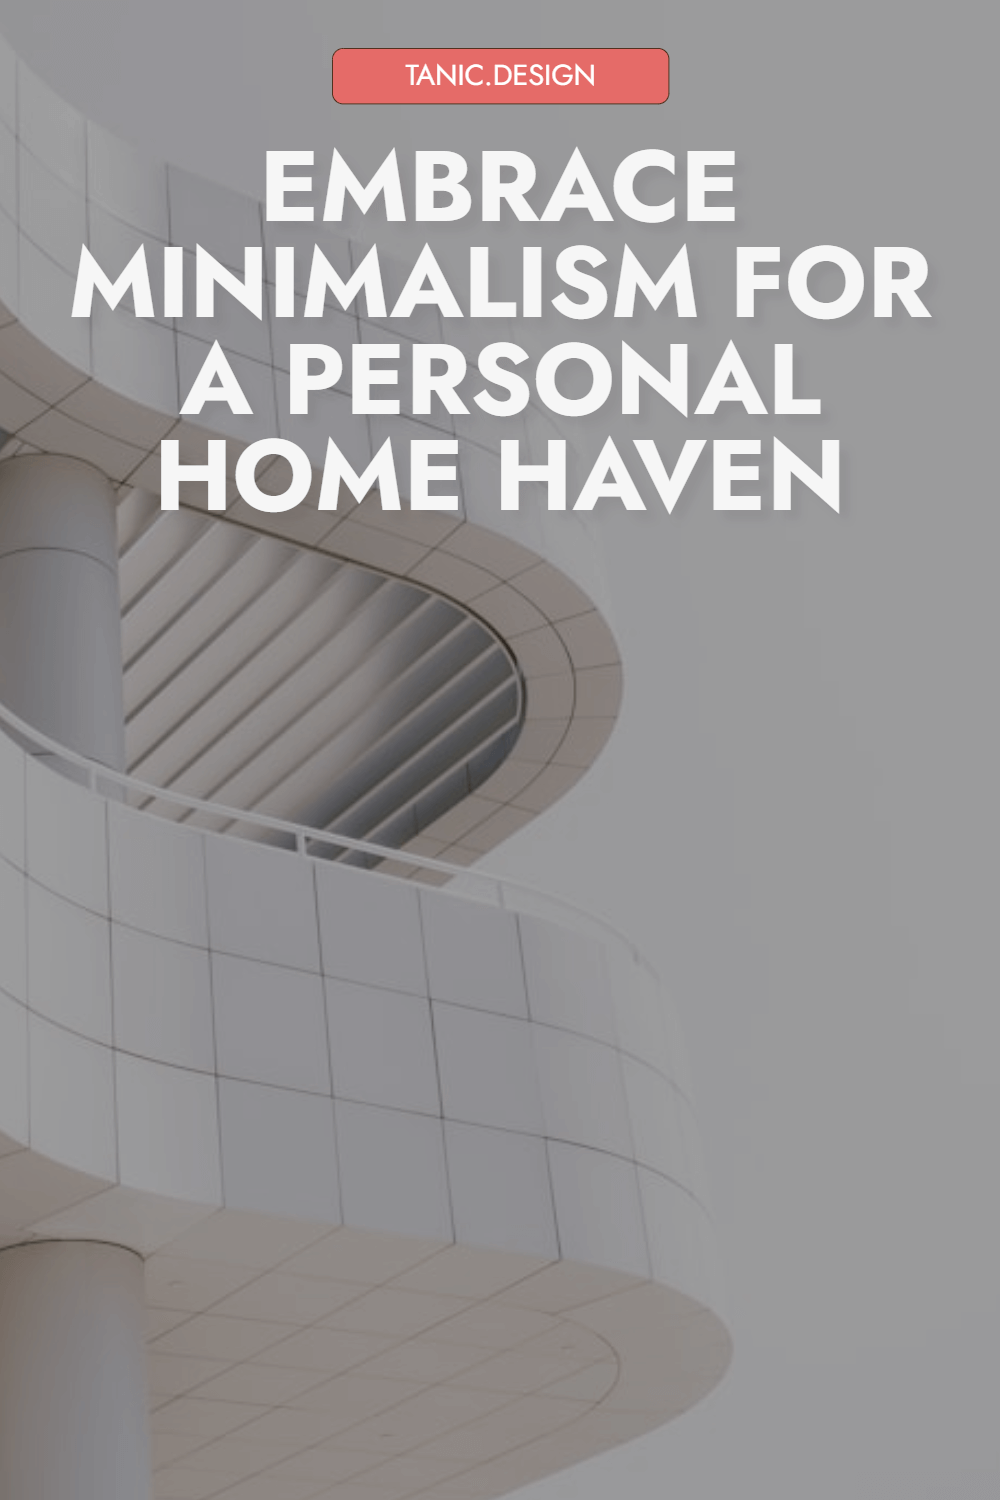 Embracing Minimalism at Home